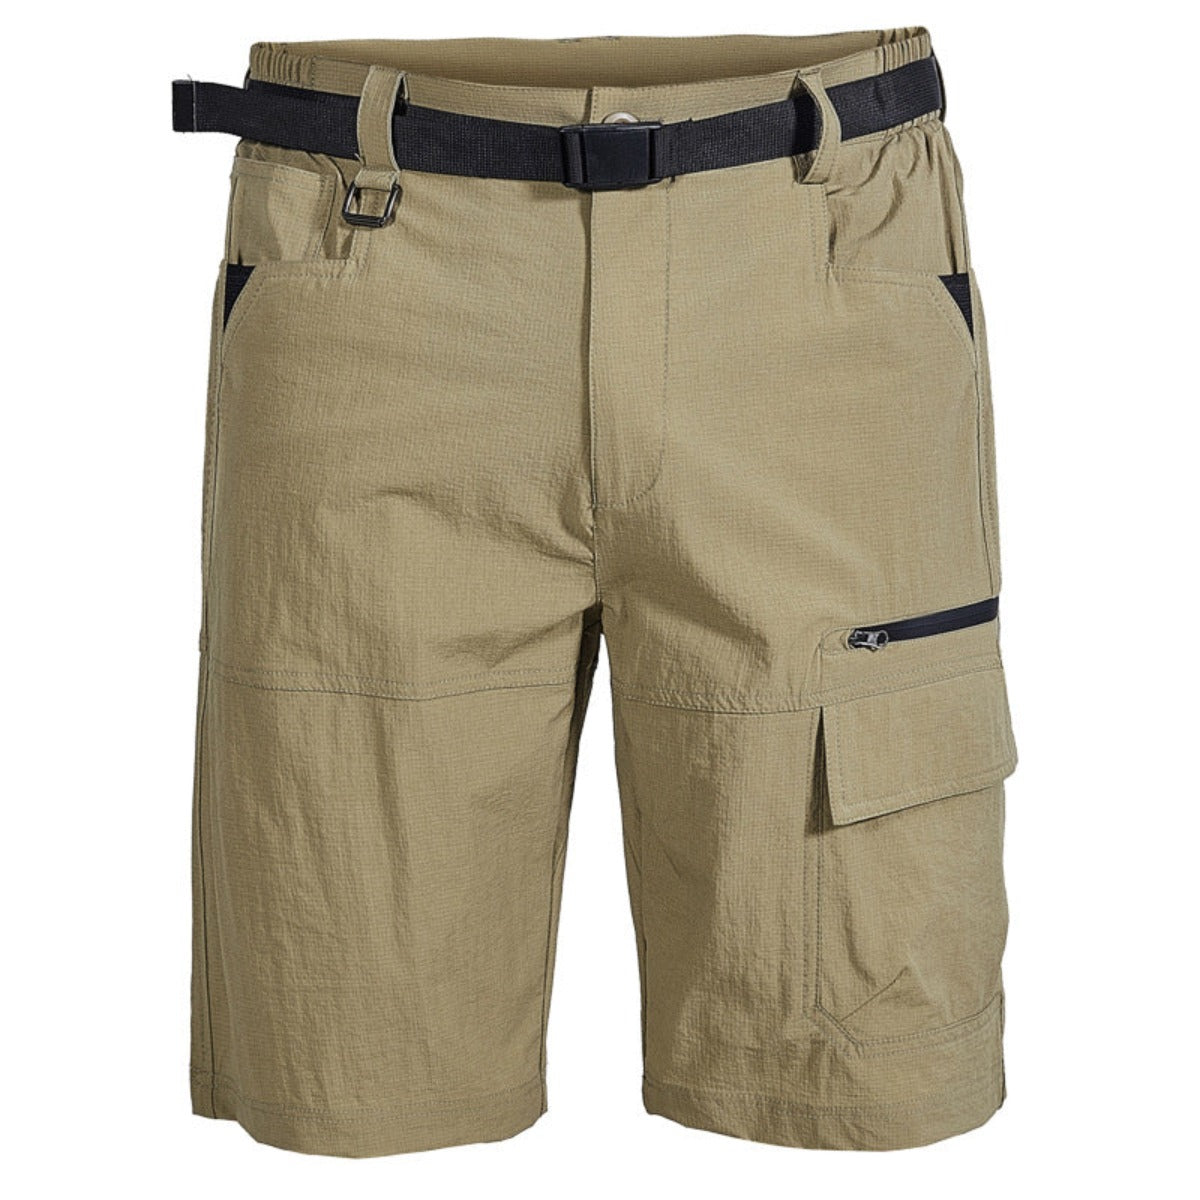 Mens Multi-Pocket Cargo Shorts Summer Outdoor Hiking Multi Pocket Quick Drying Shorts - Khaki - Men's Shorts - Carvan Mart